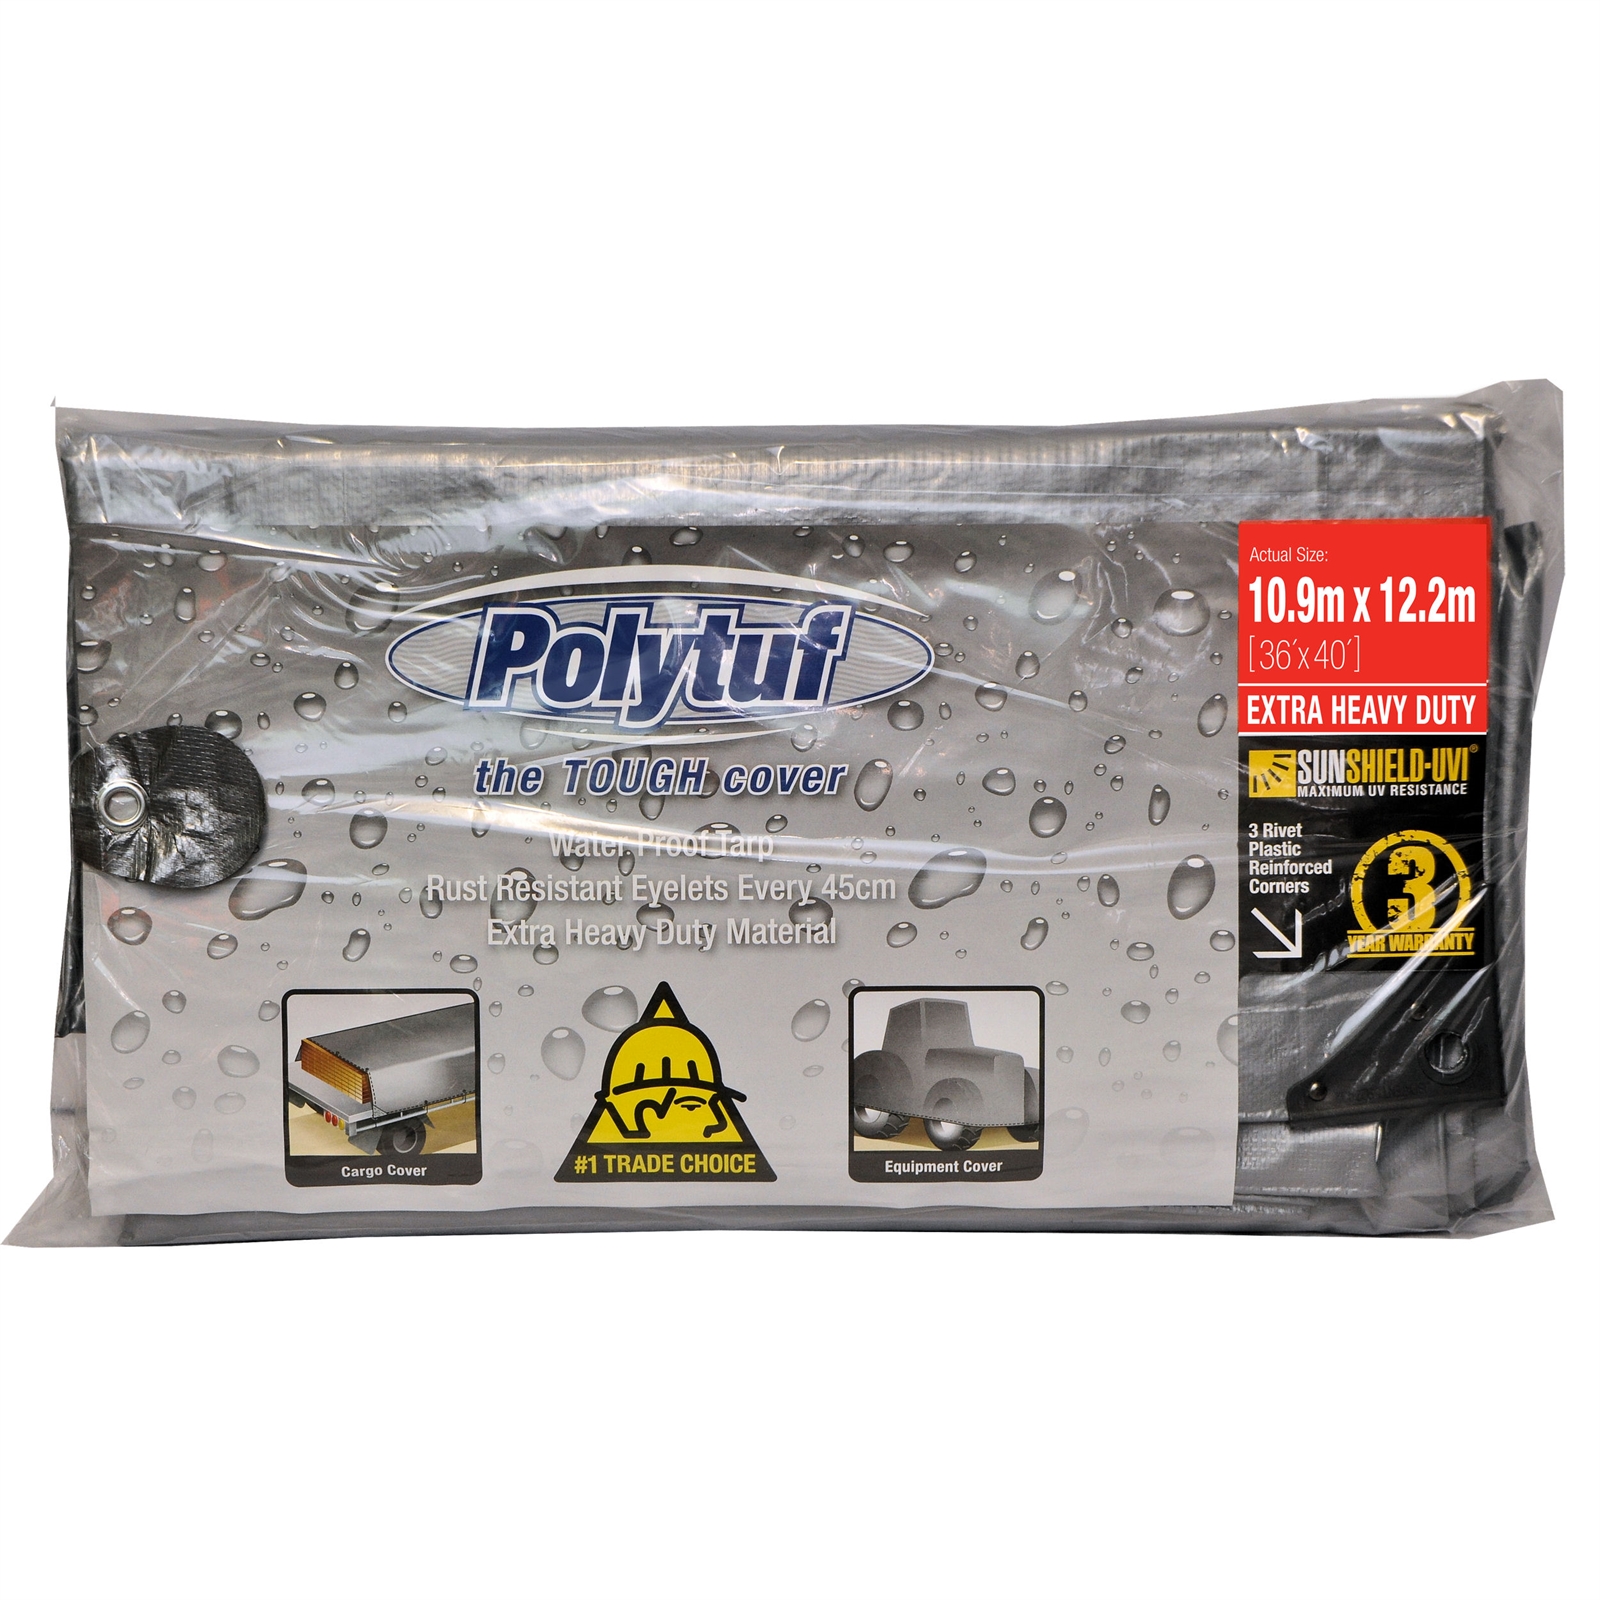 Polytuf 10.9 x 12.2m Silver and Black Extra Heavy Duty Tarpaulin